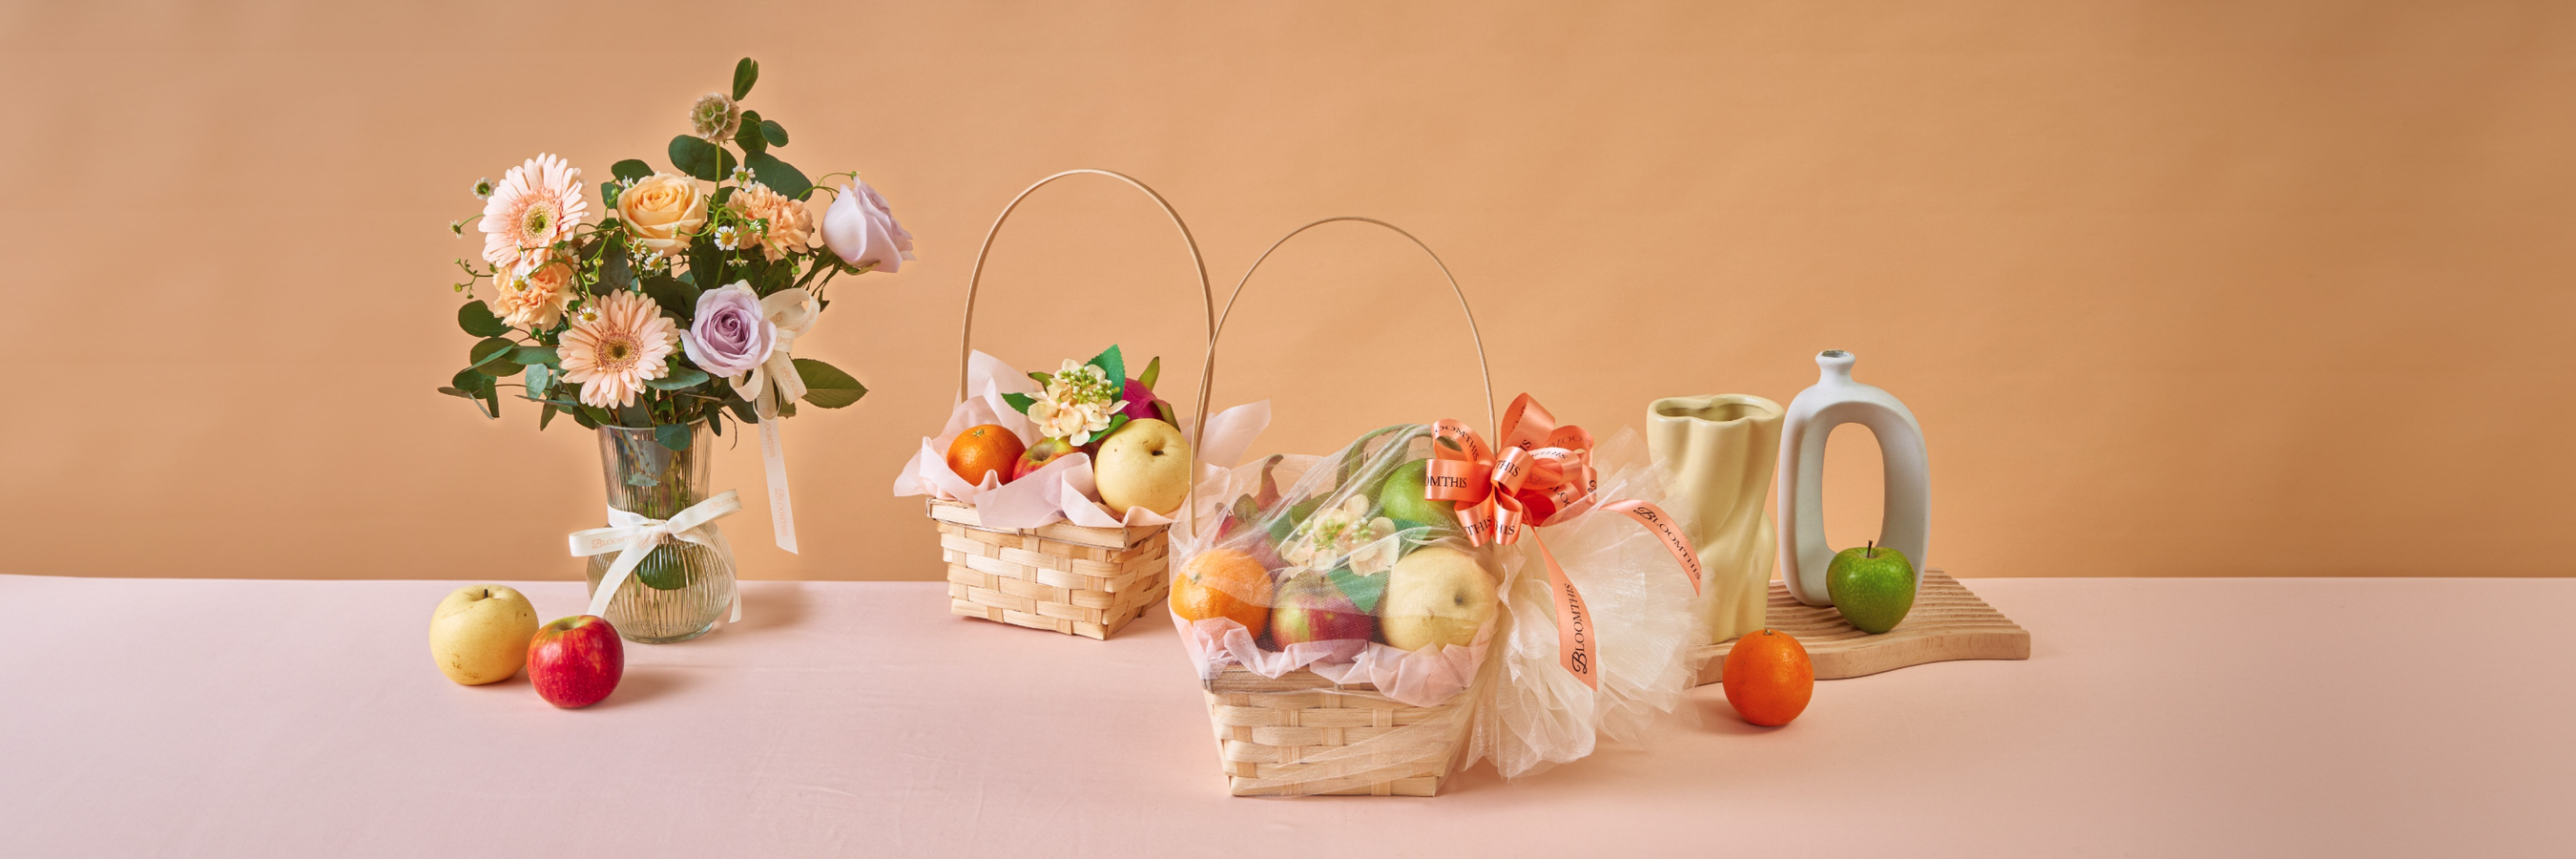 BloomThis Fruit Baskets & Gift Sets